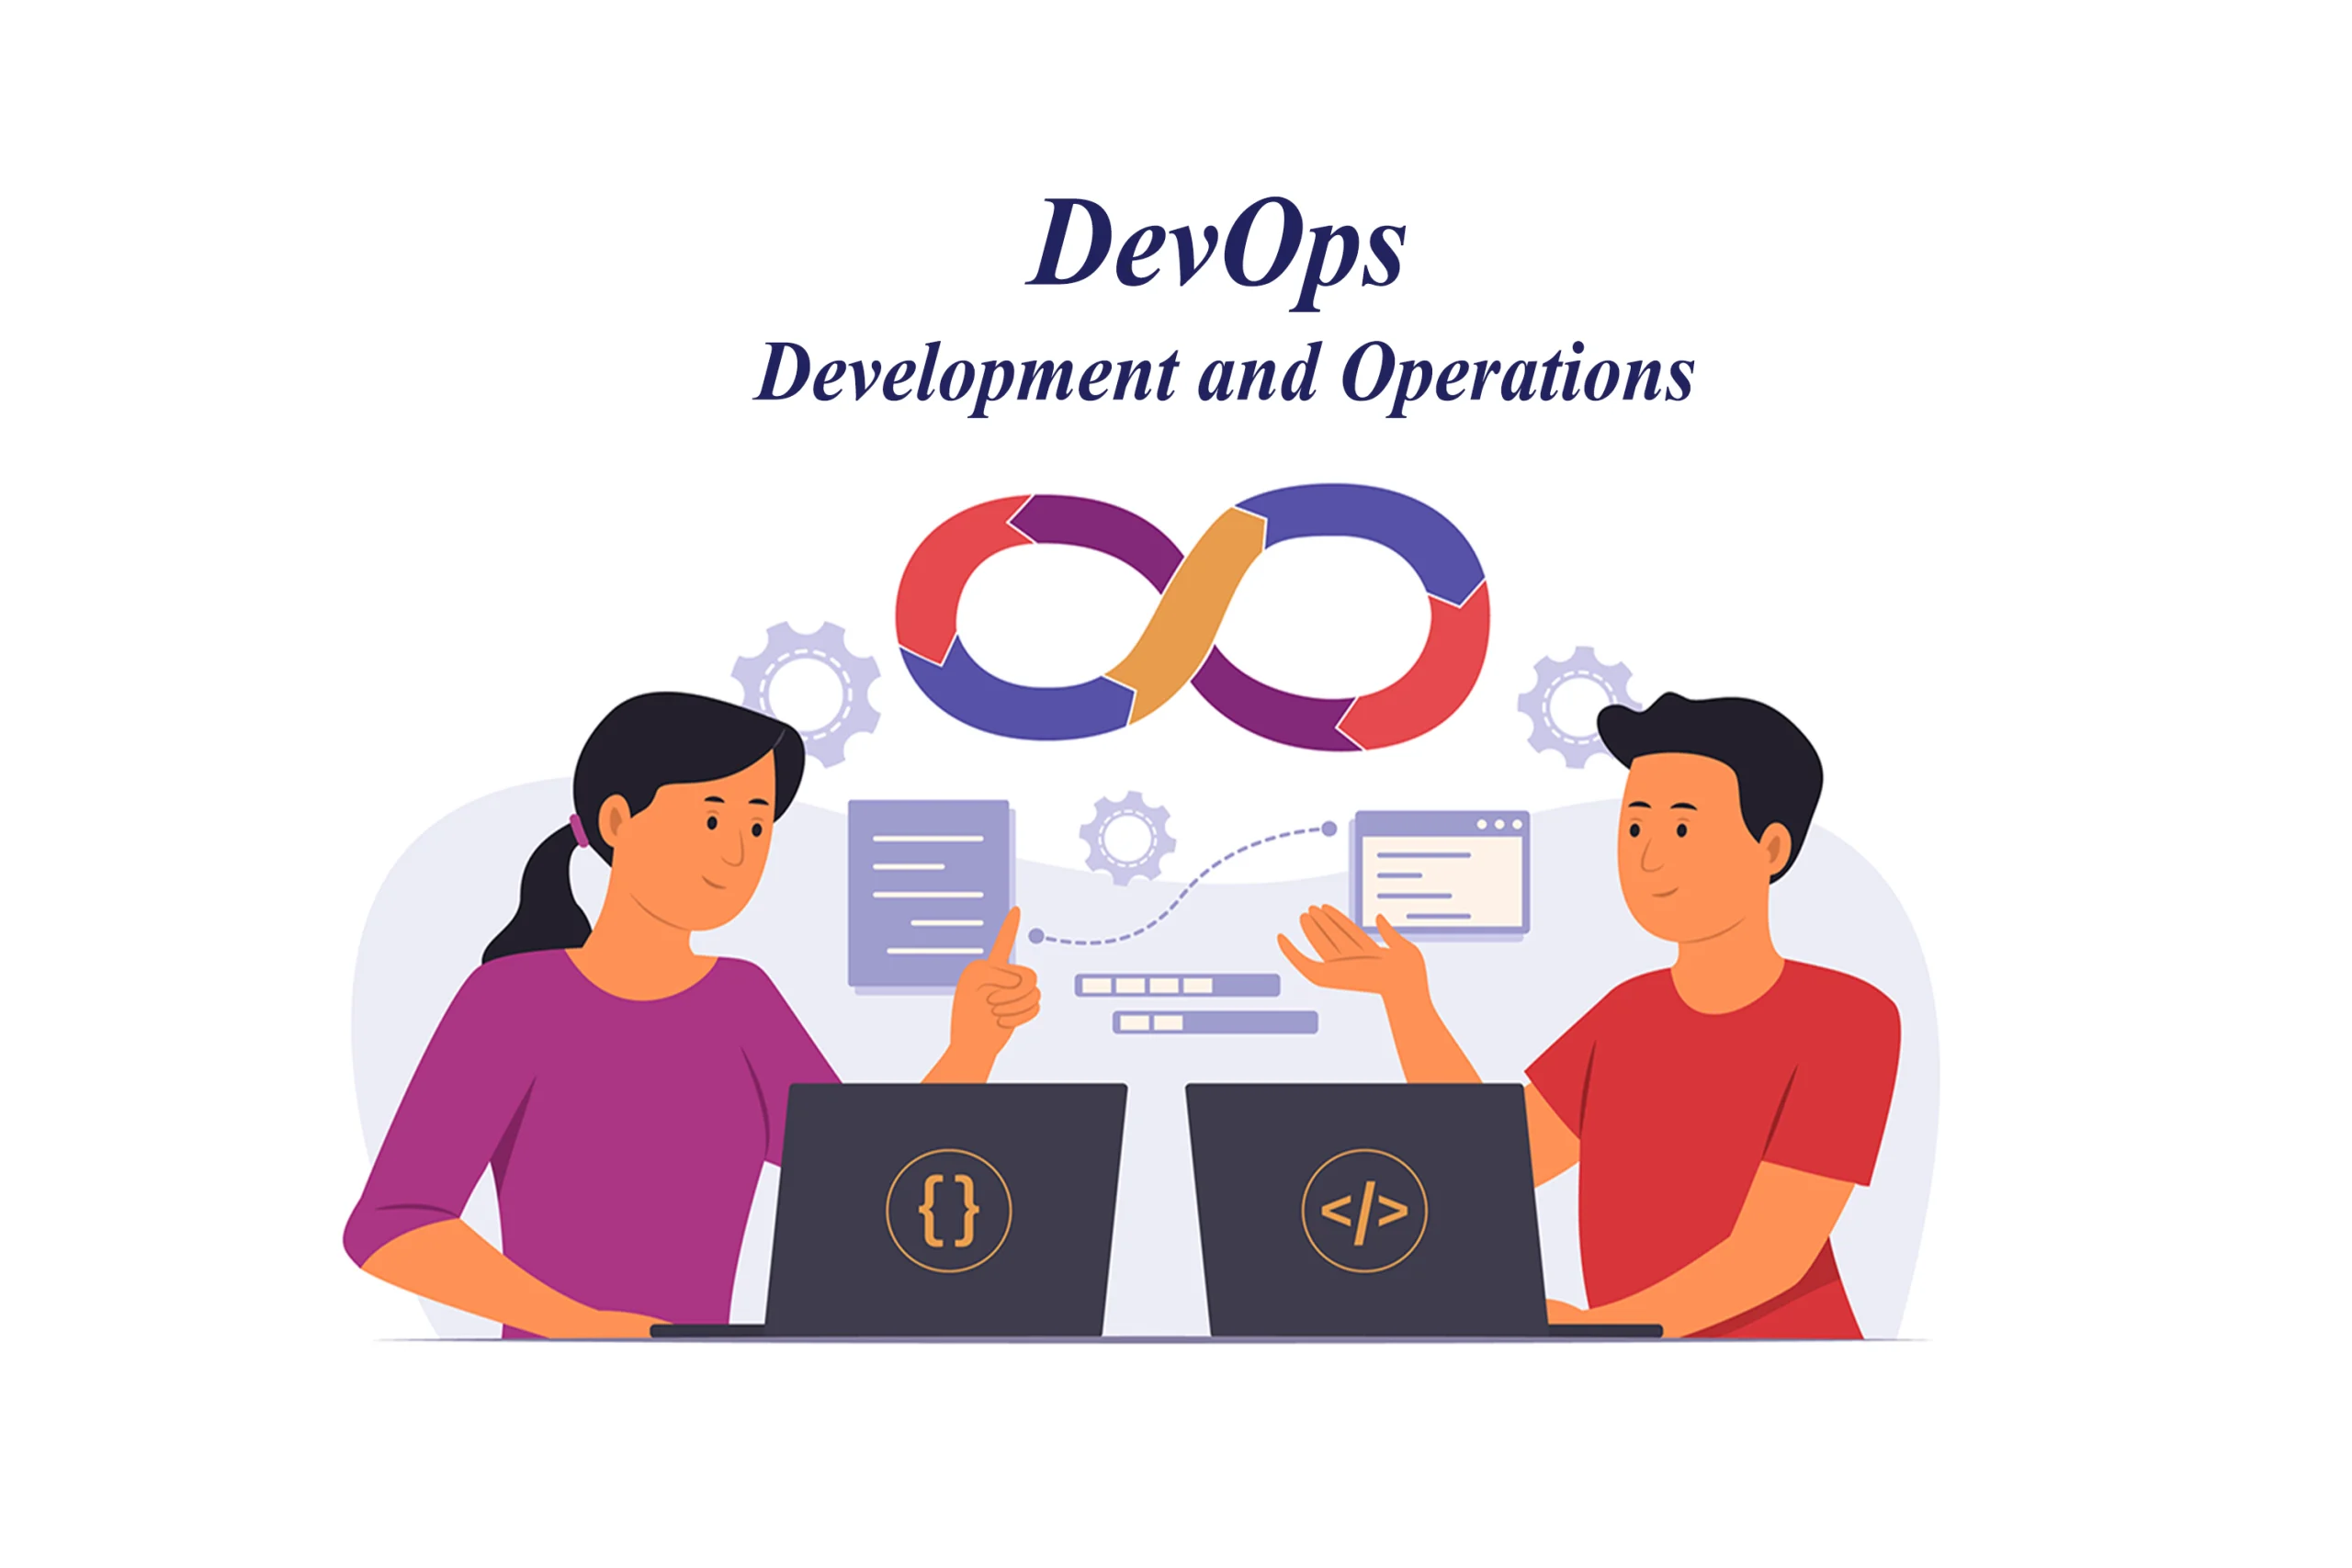 DevOps - development and operations